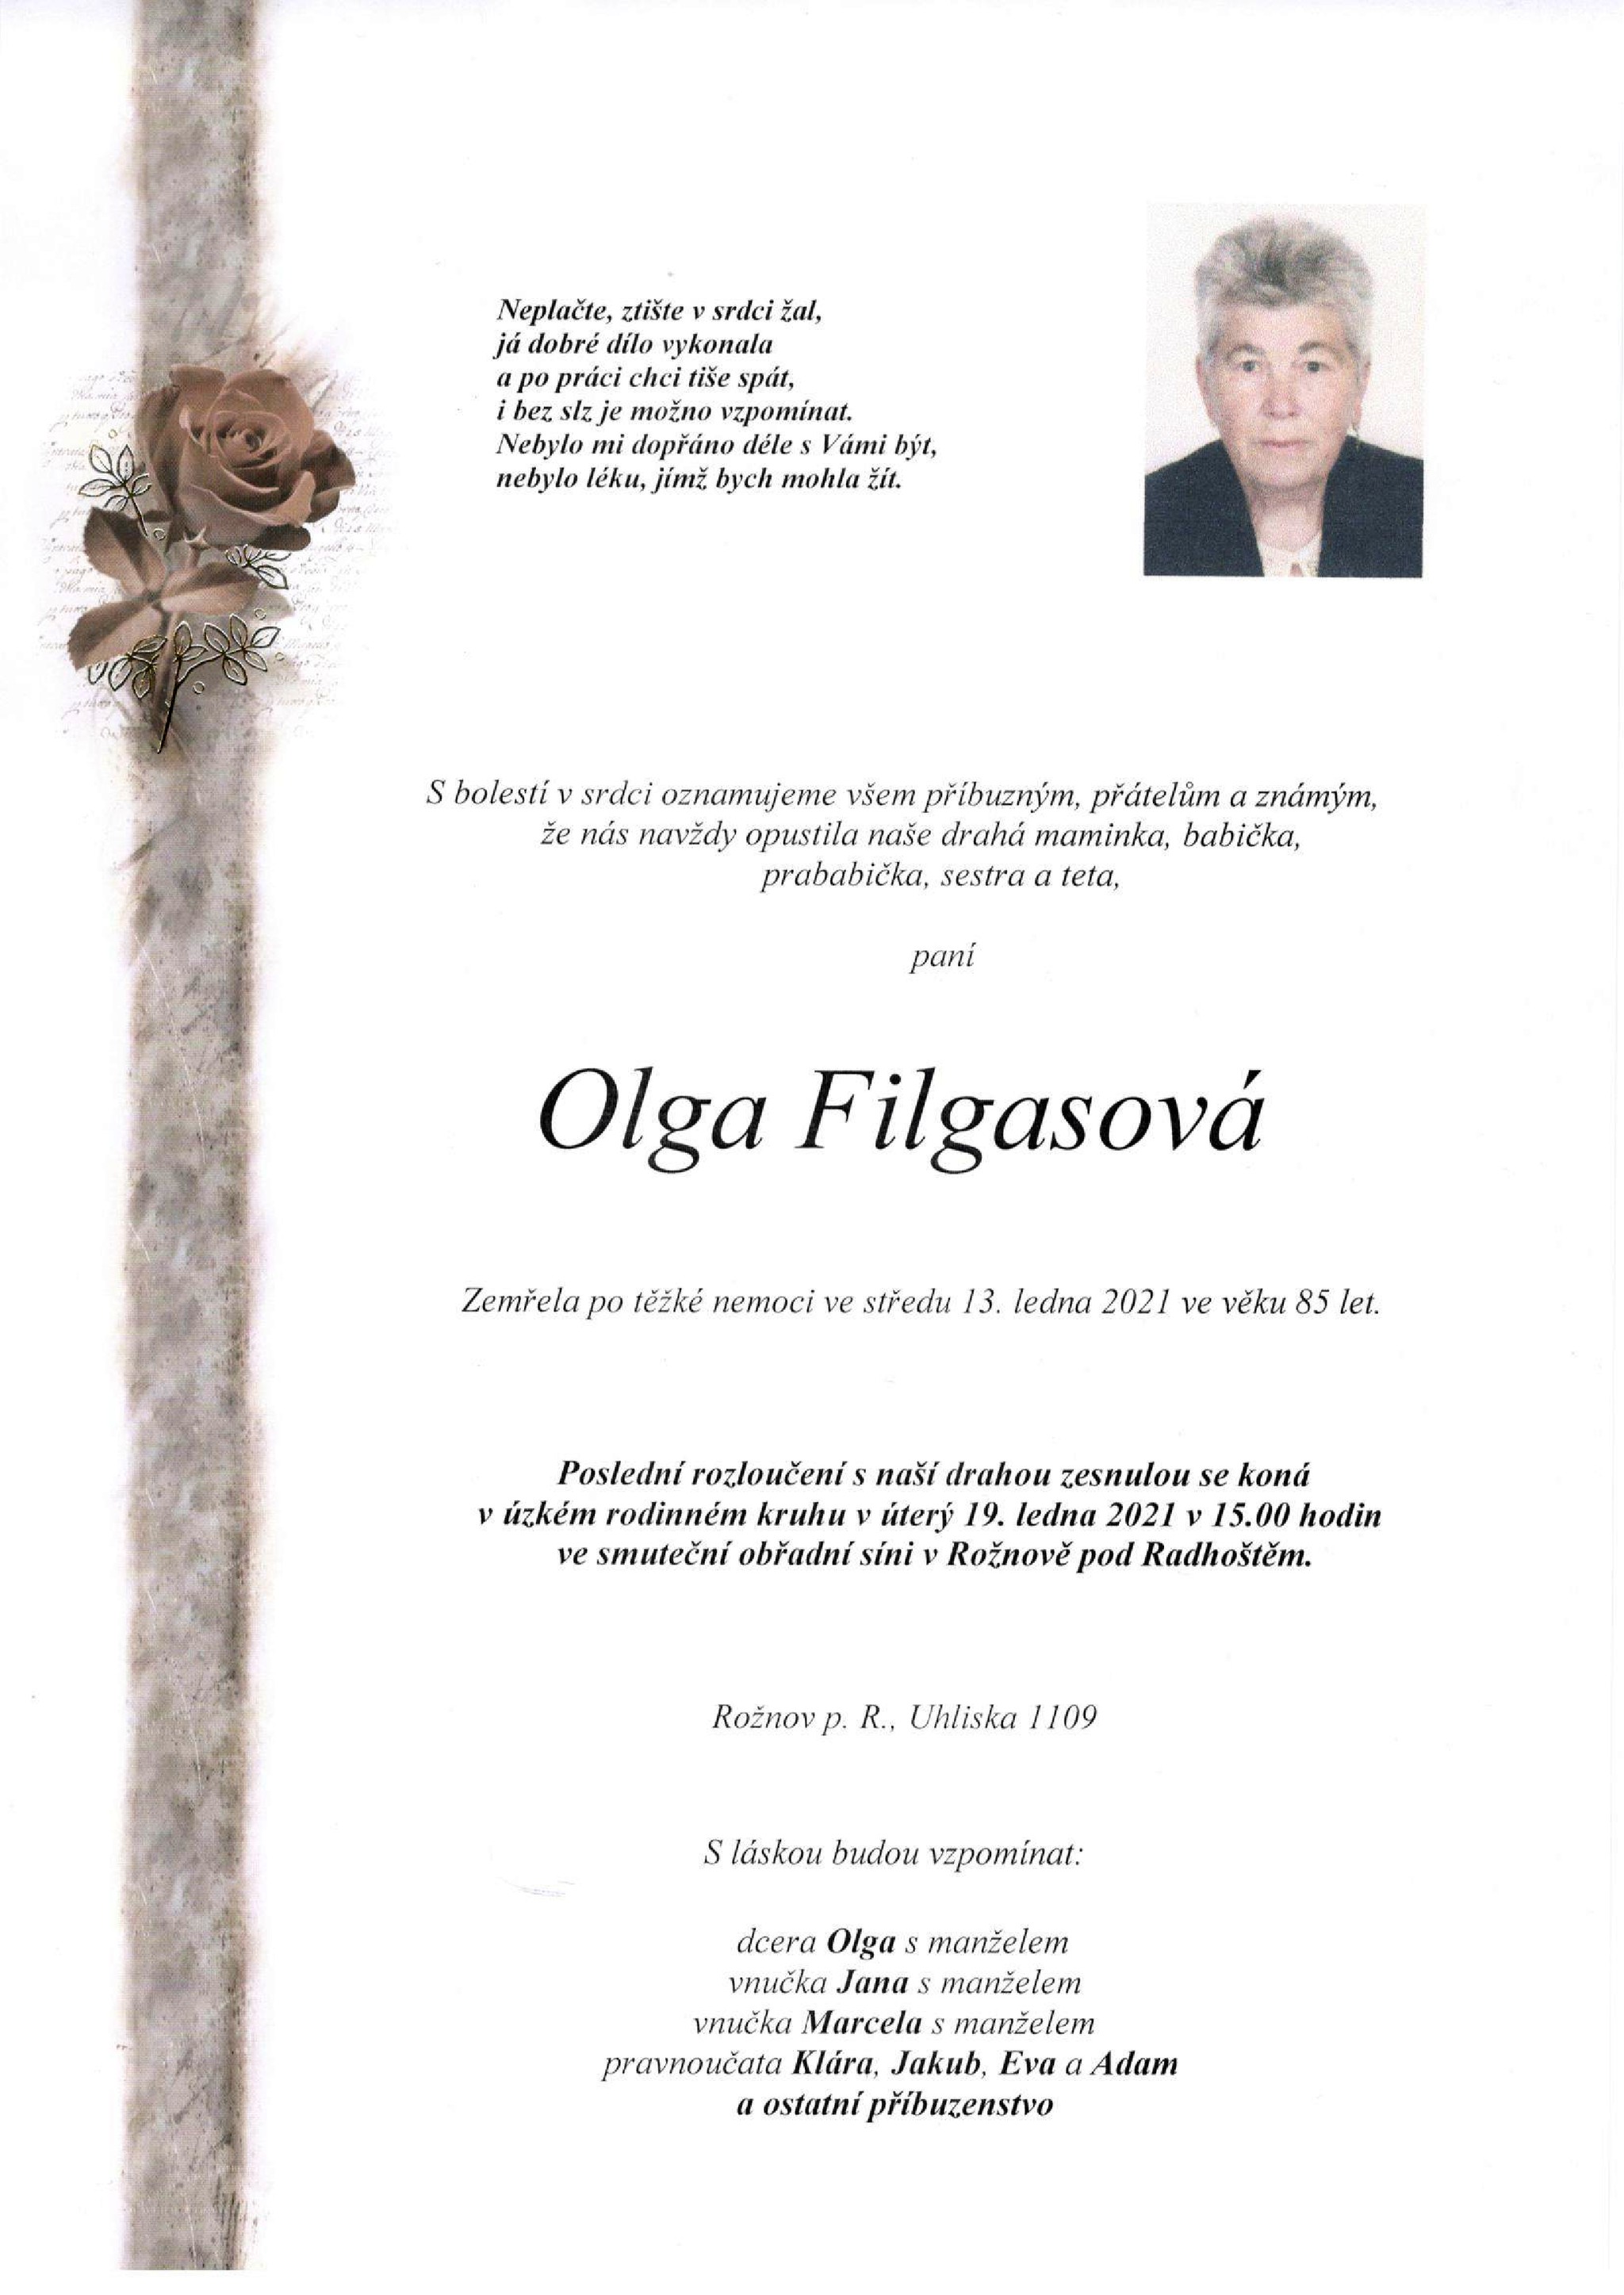 Olga Filgasová